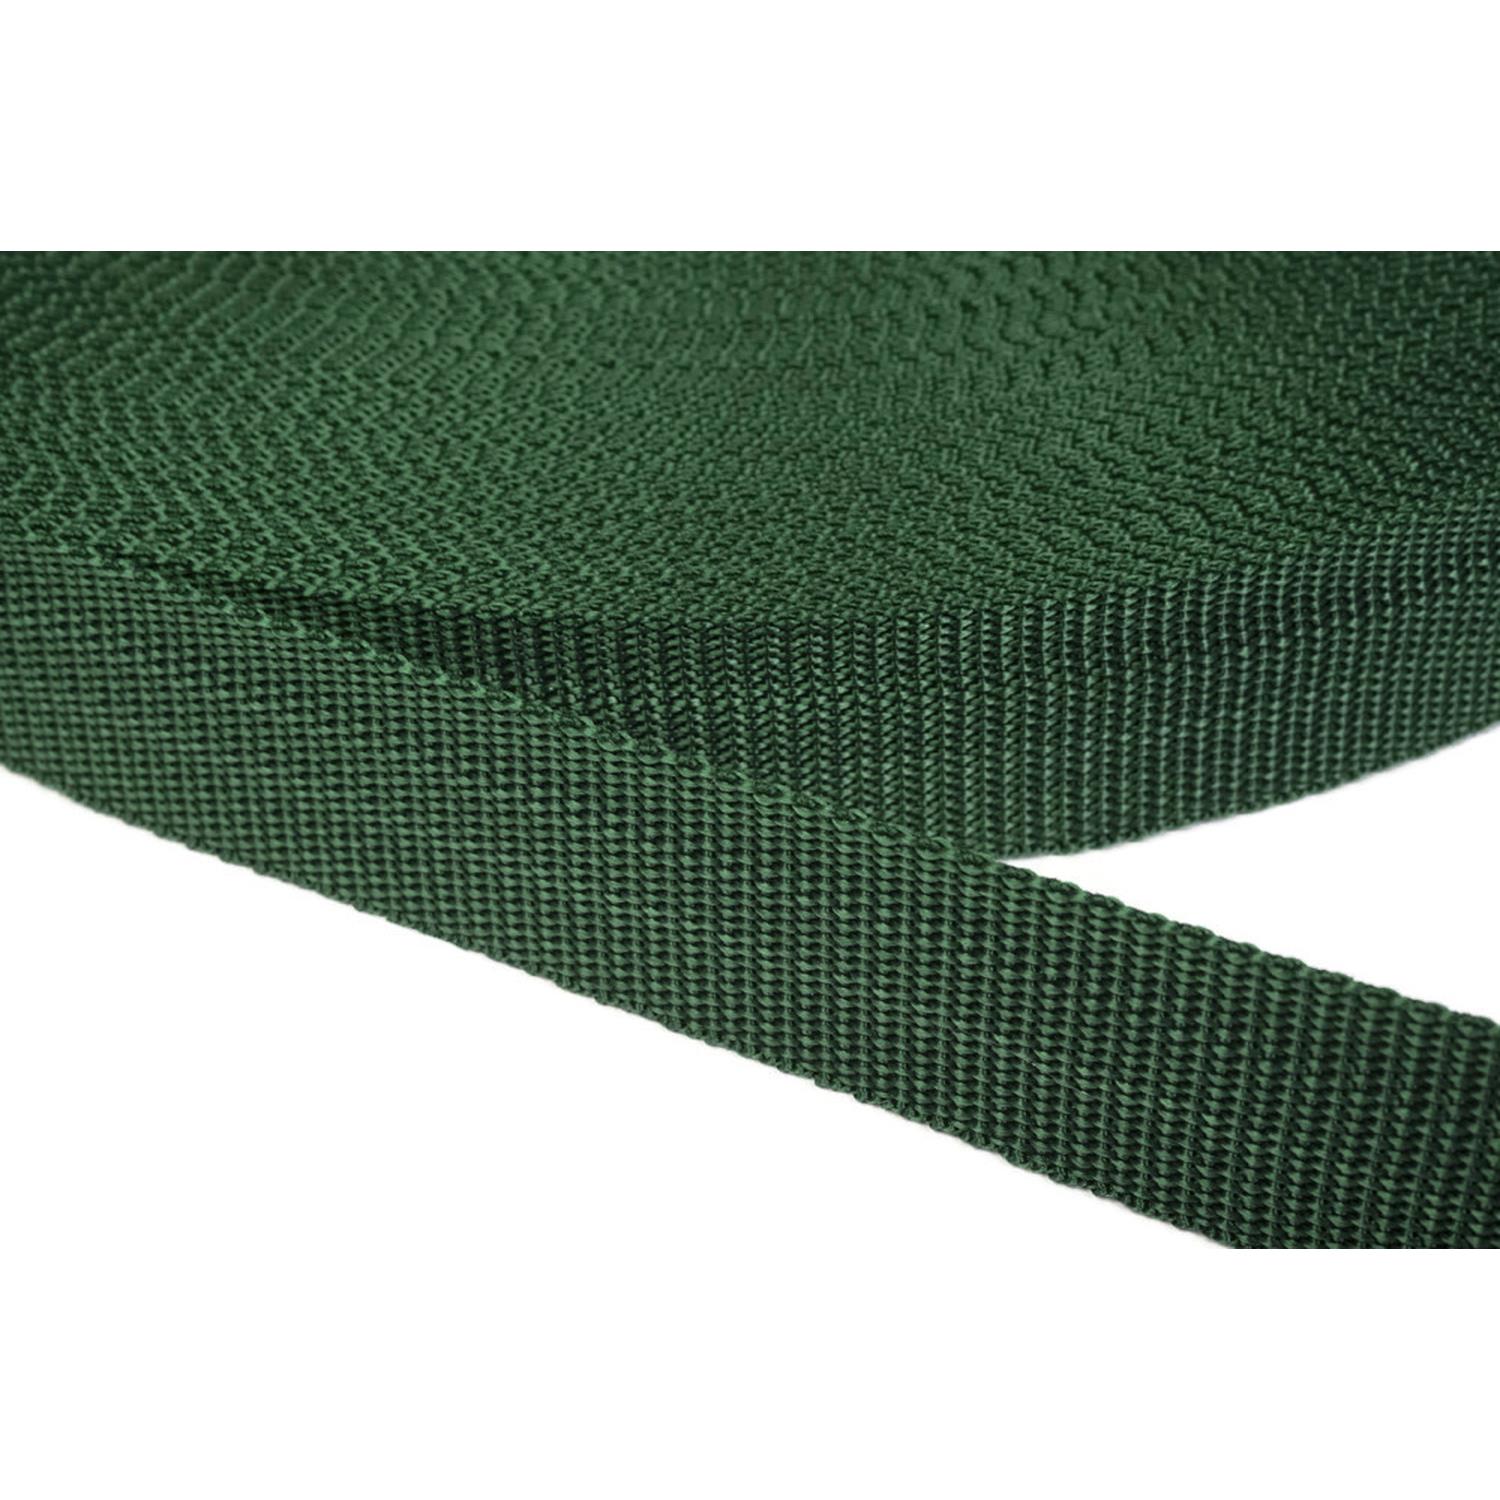 Gurtband 25mm breit aus Polypropylen in 41 Farben 35 - dunkelgrün 6 Meter